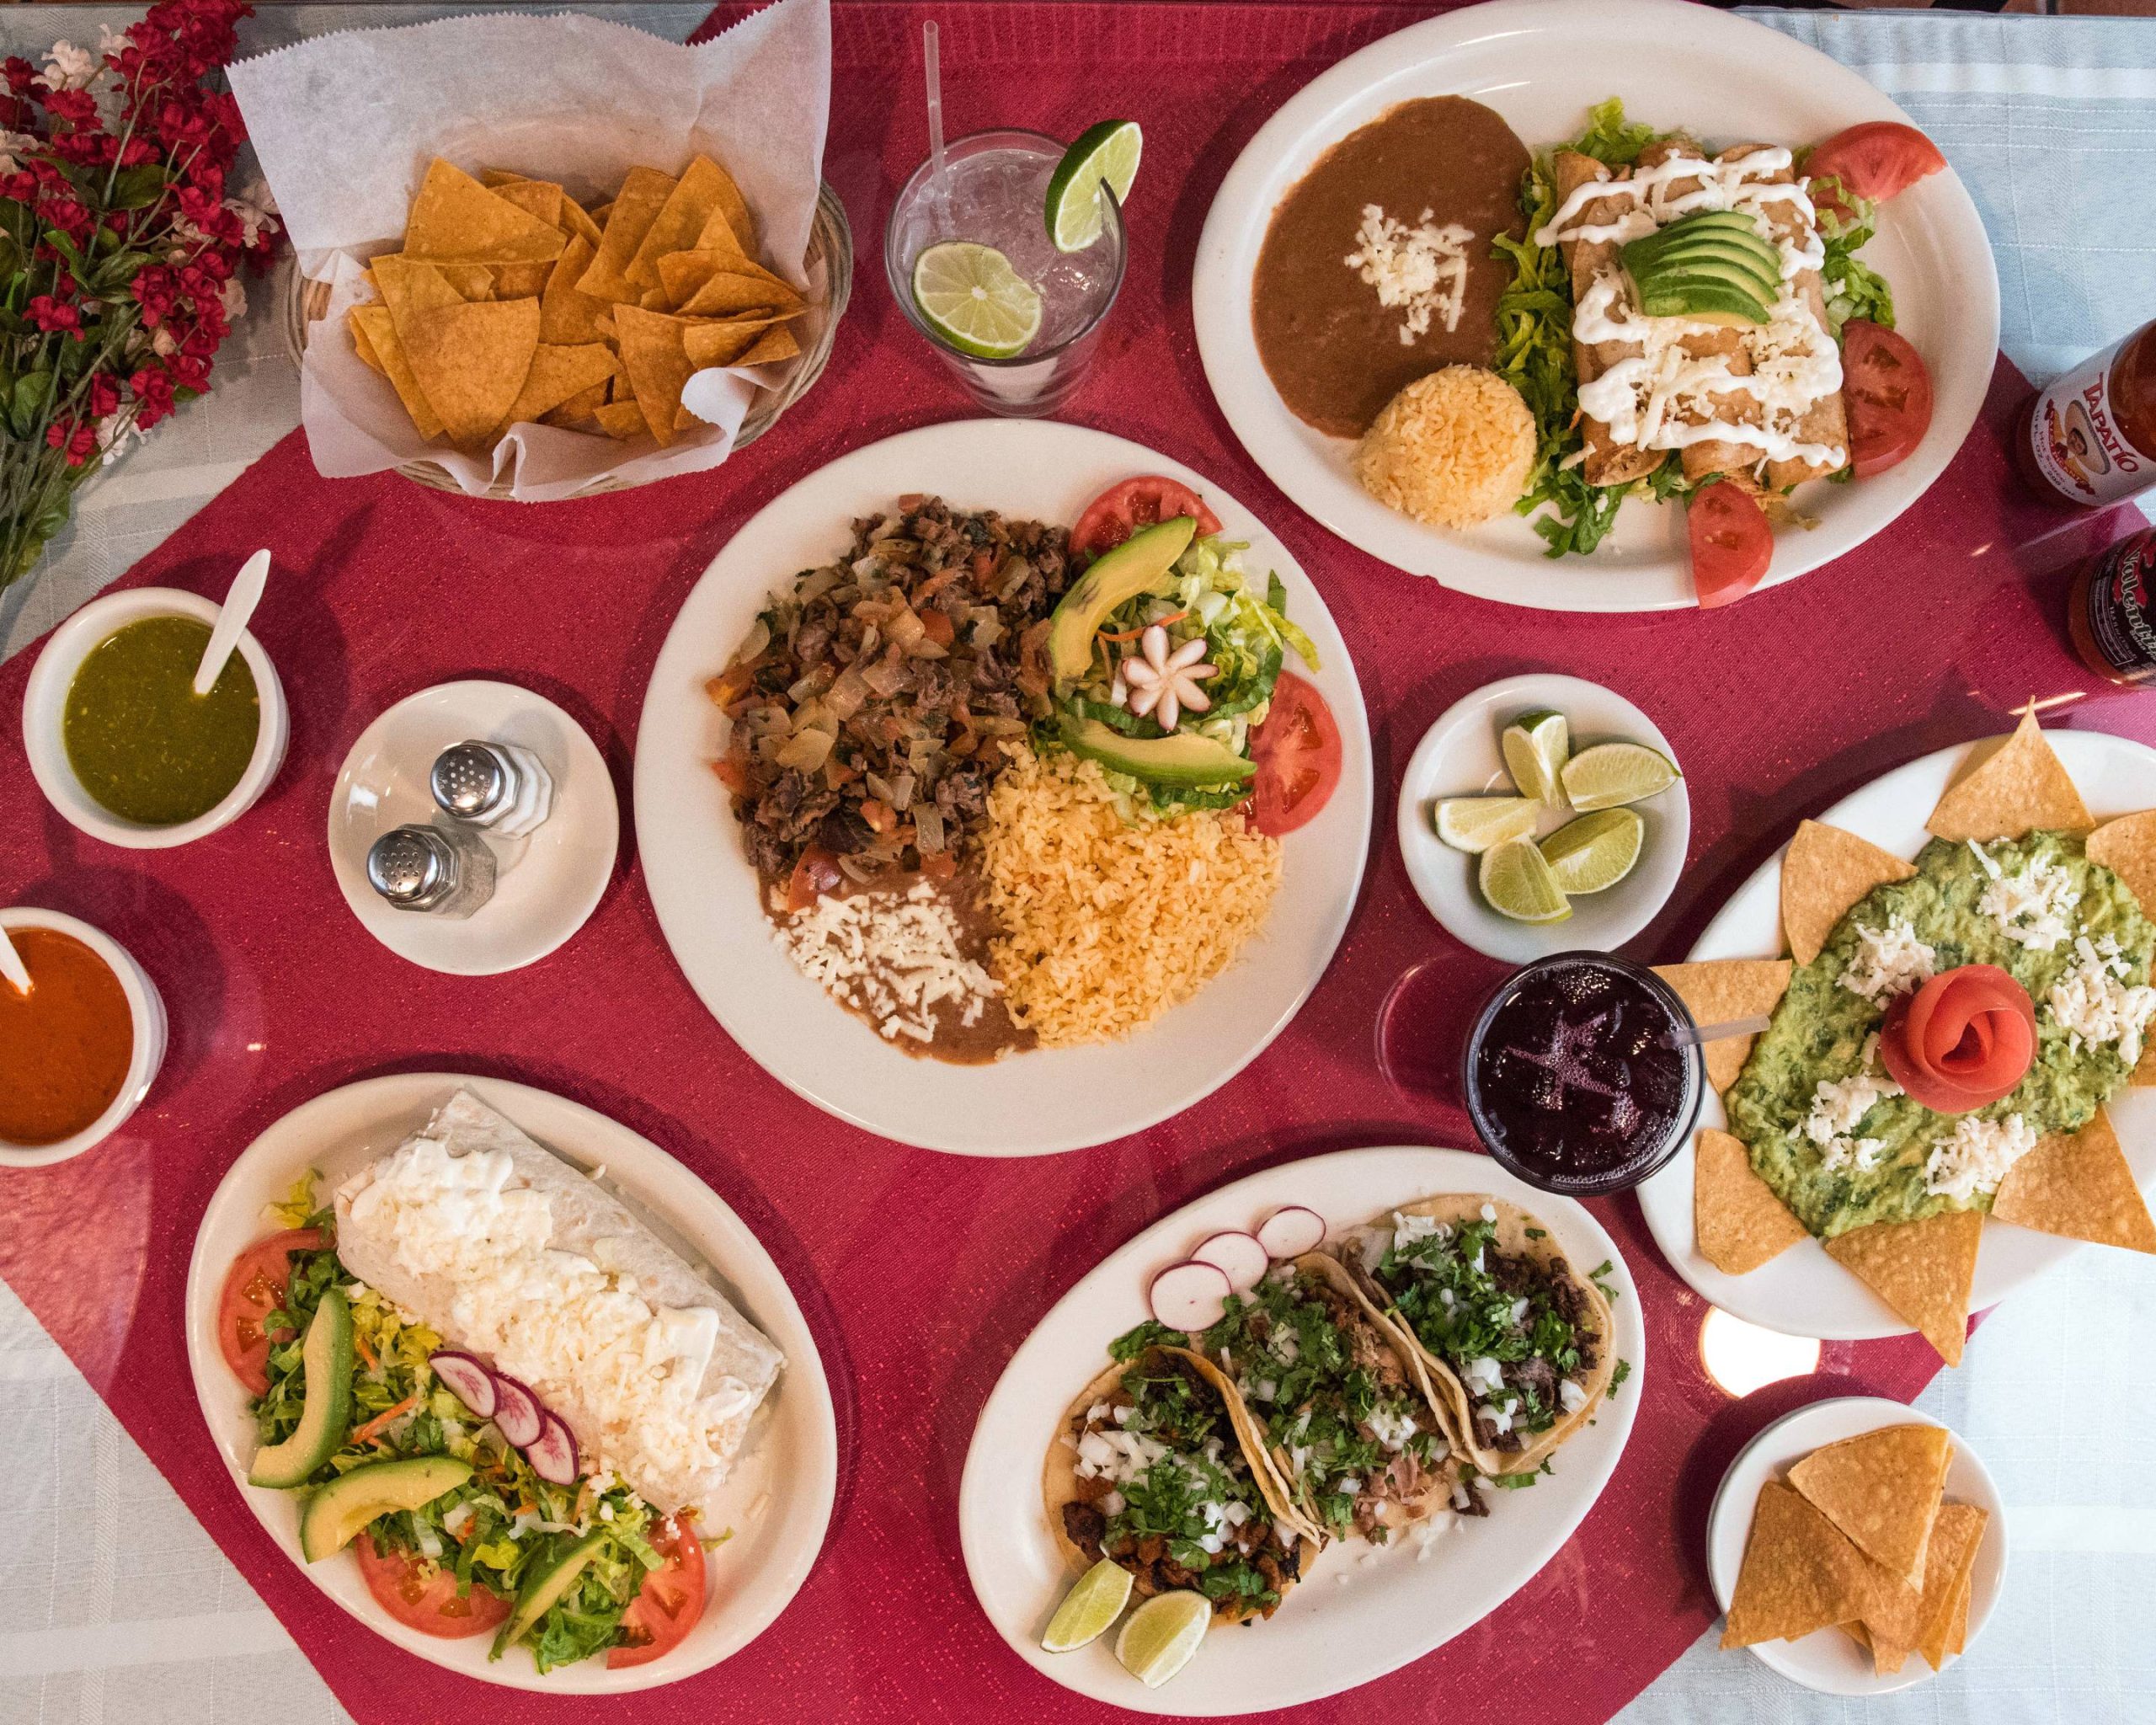 Tijuana Mexican Food